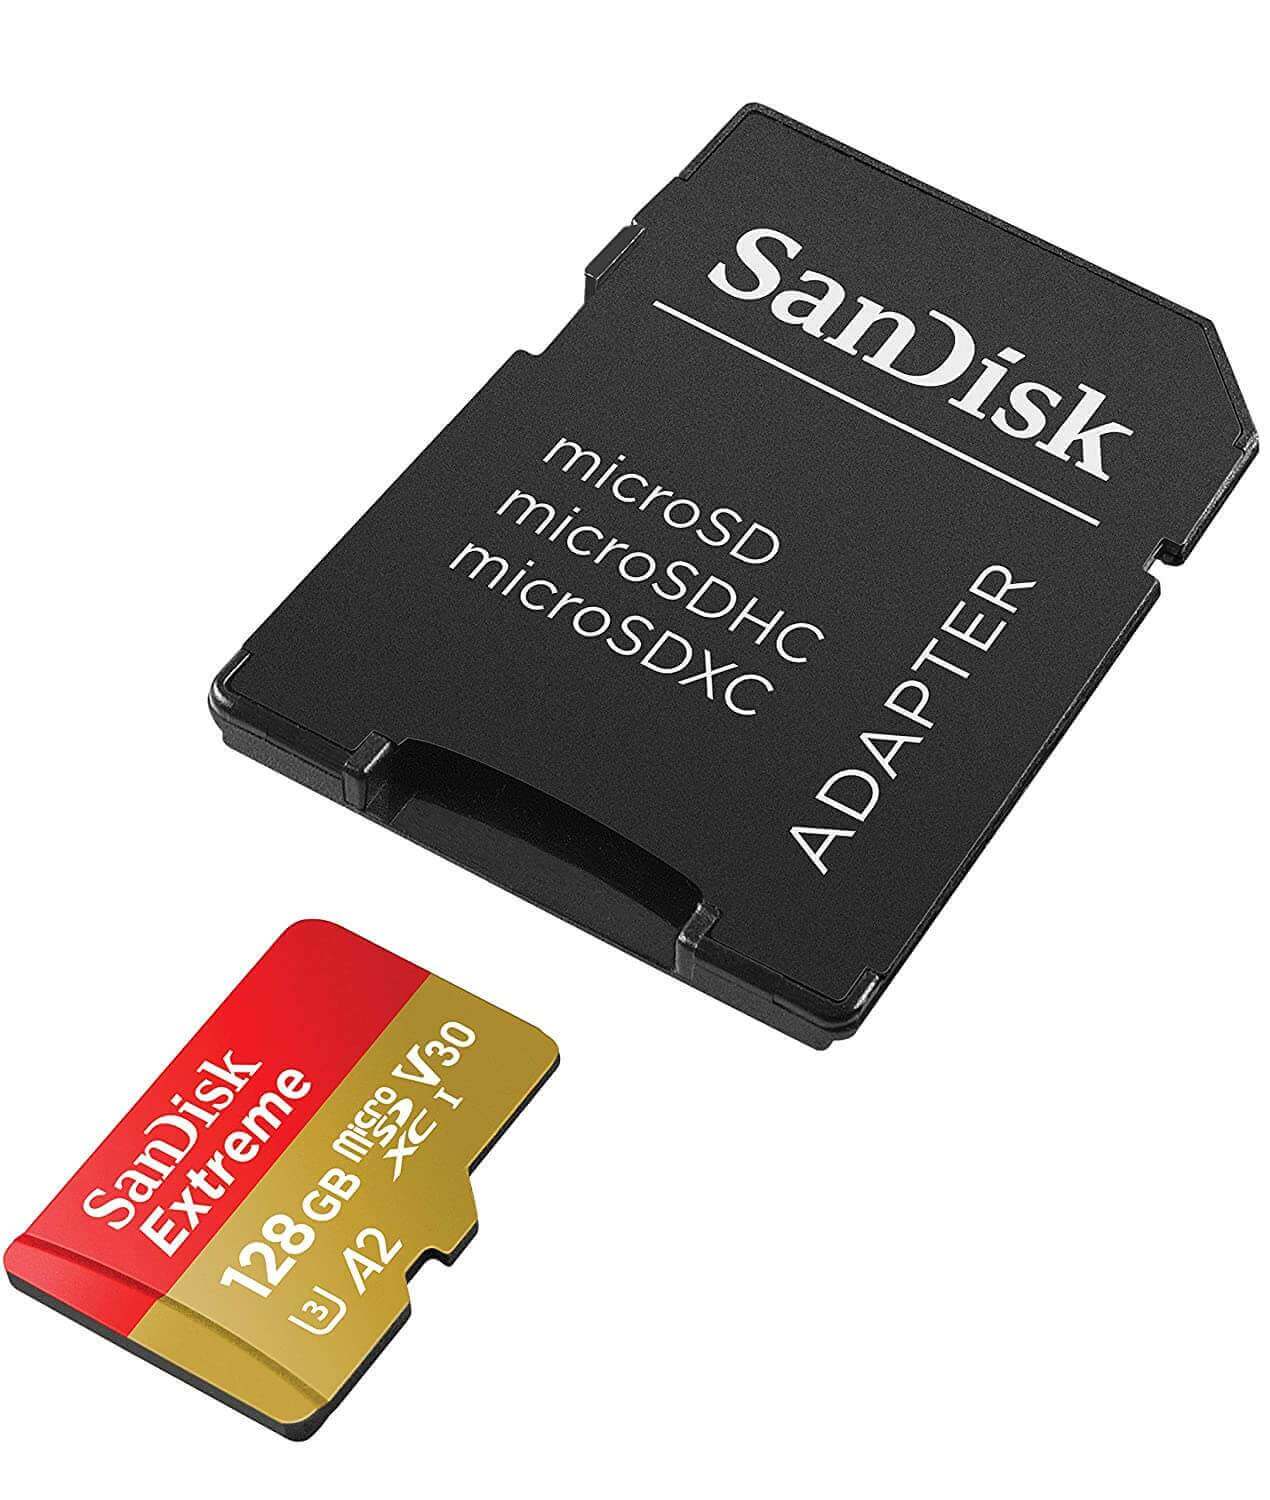 SANDISK Extreme® Micro-SDXC Speicherkarte SD Karte 128 GB 160 MB/s